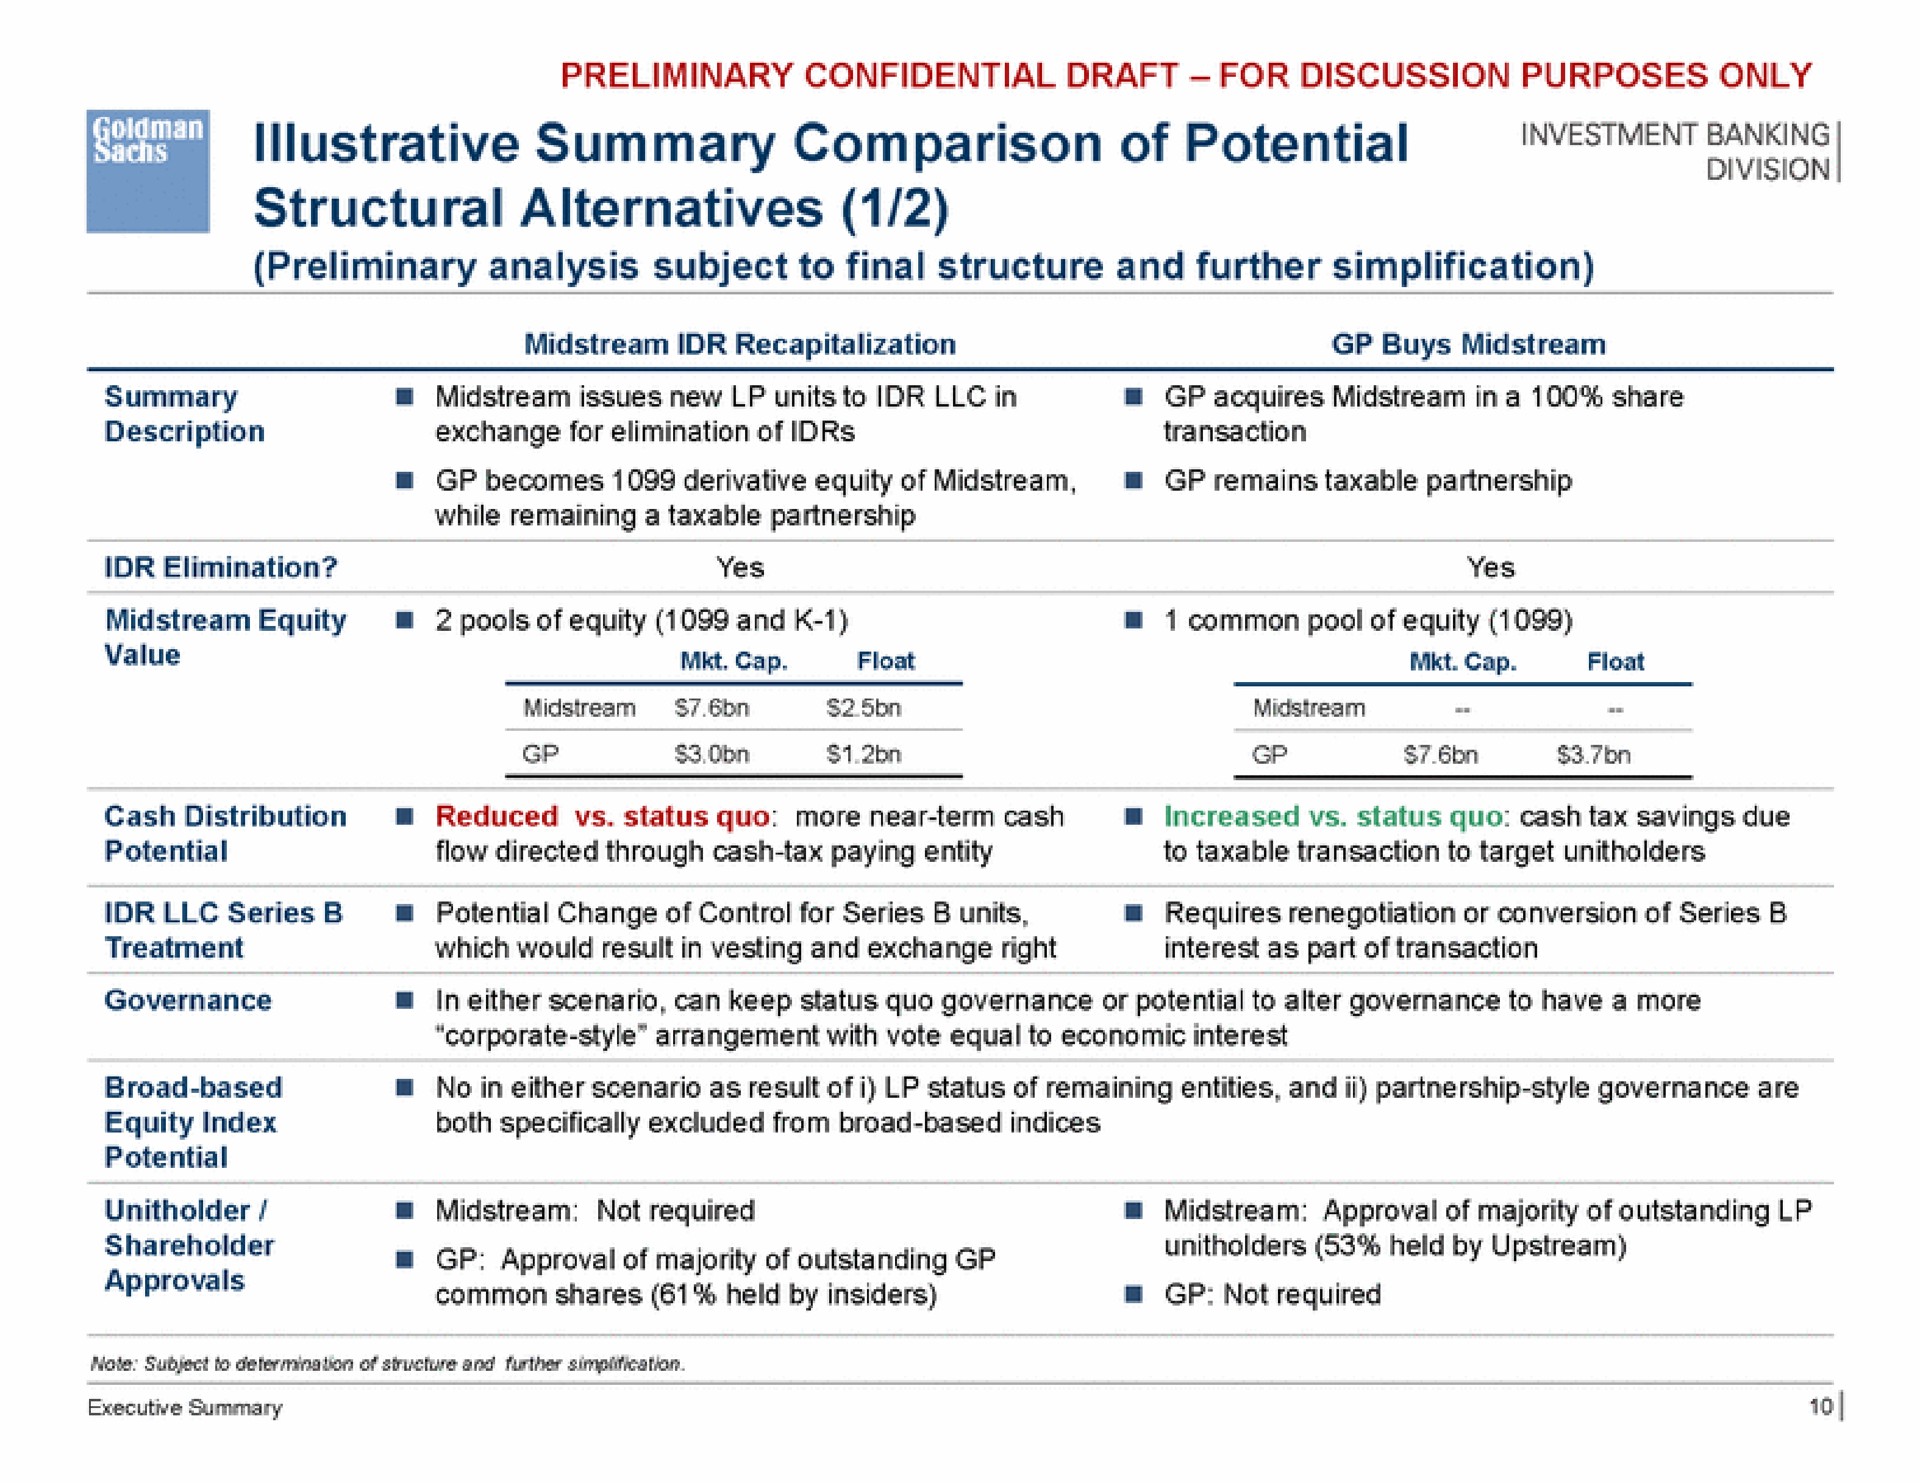 secs summary comparison of potential structural alternatives | Goldman Sachs